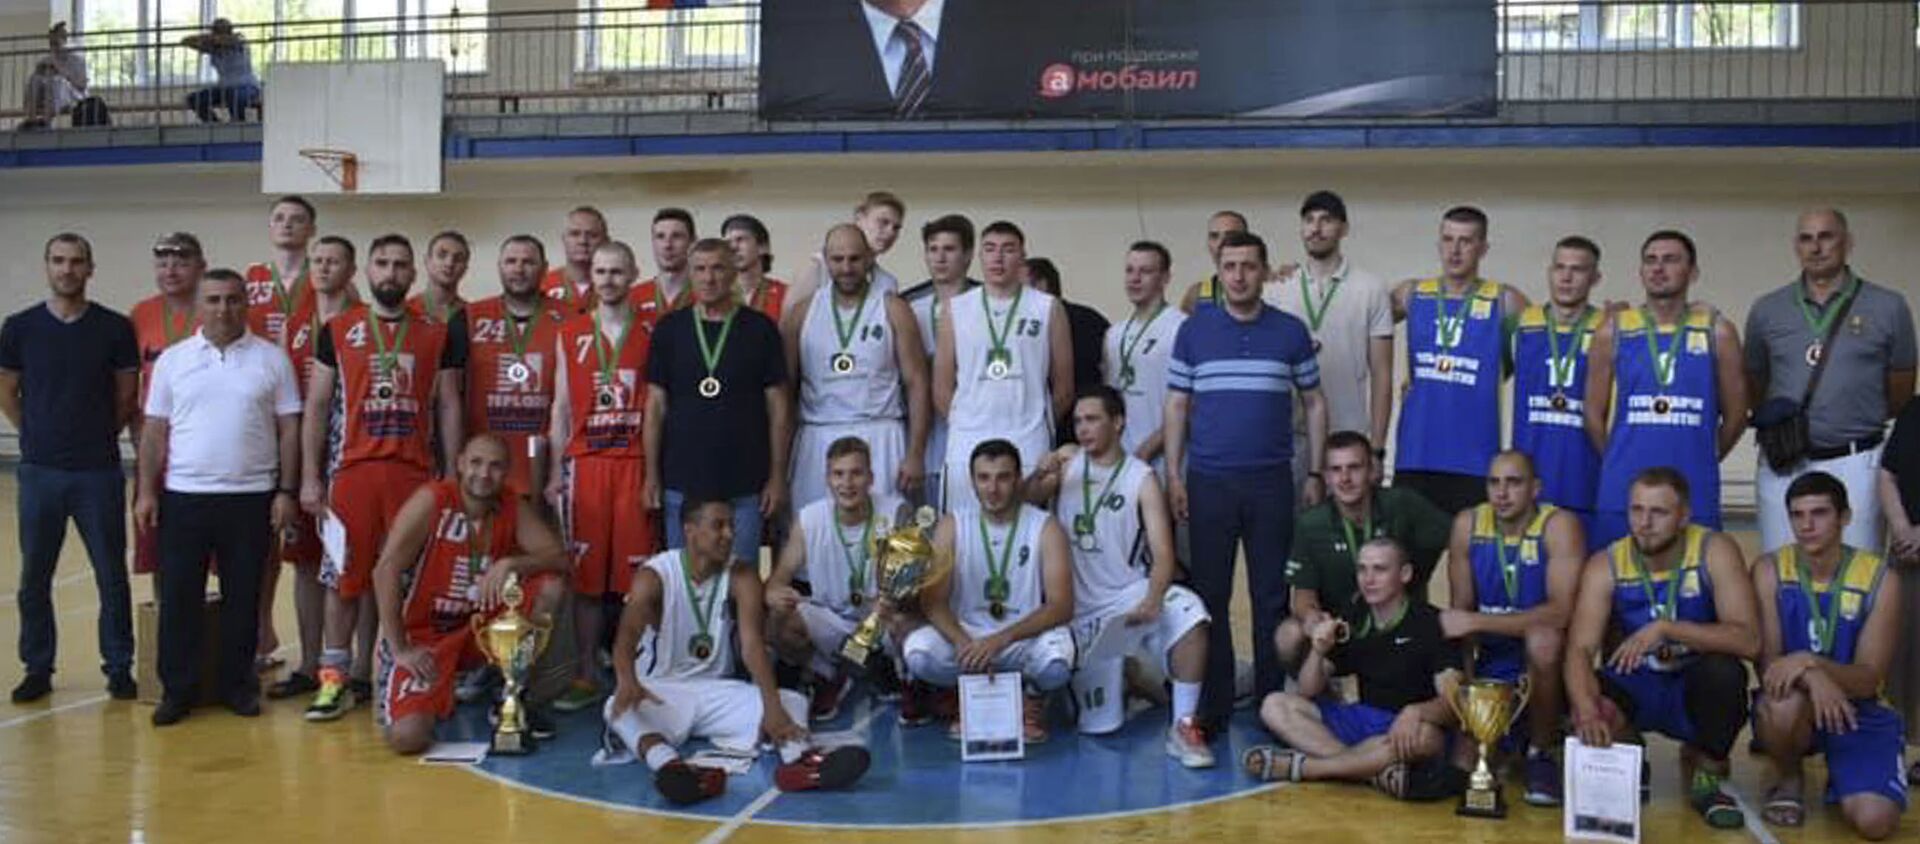 Команда из Кропоткина победила на турнире по баскетболу памяти Сергея Багапш  - Sputnik Абхазия, 1920, 08.07.2021